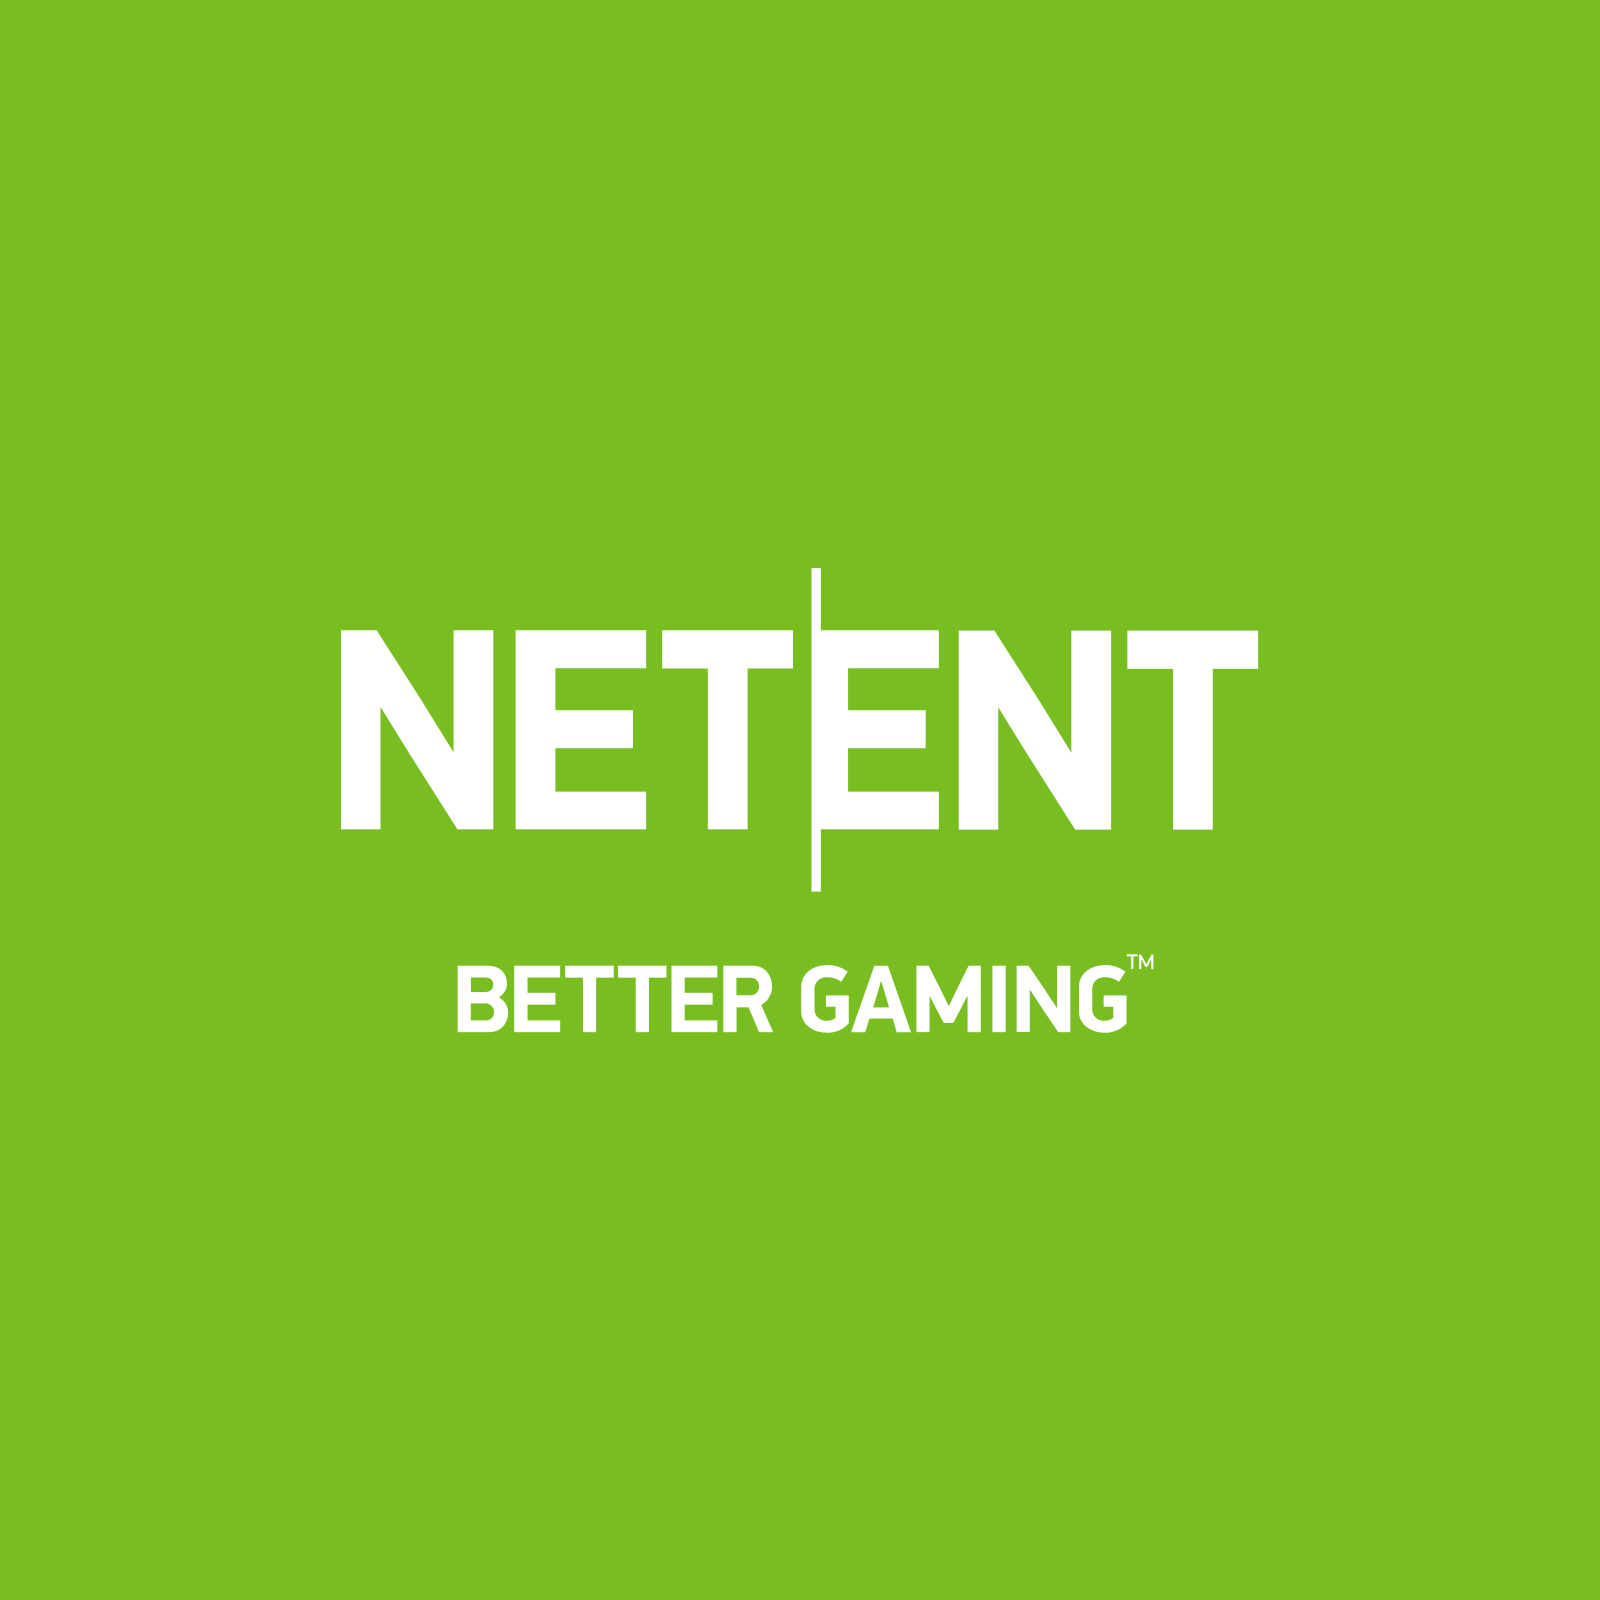 Green and White Brand Logo - NetEnt